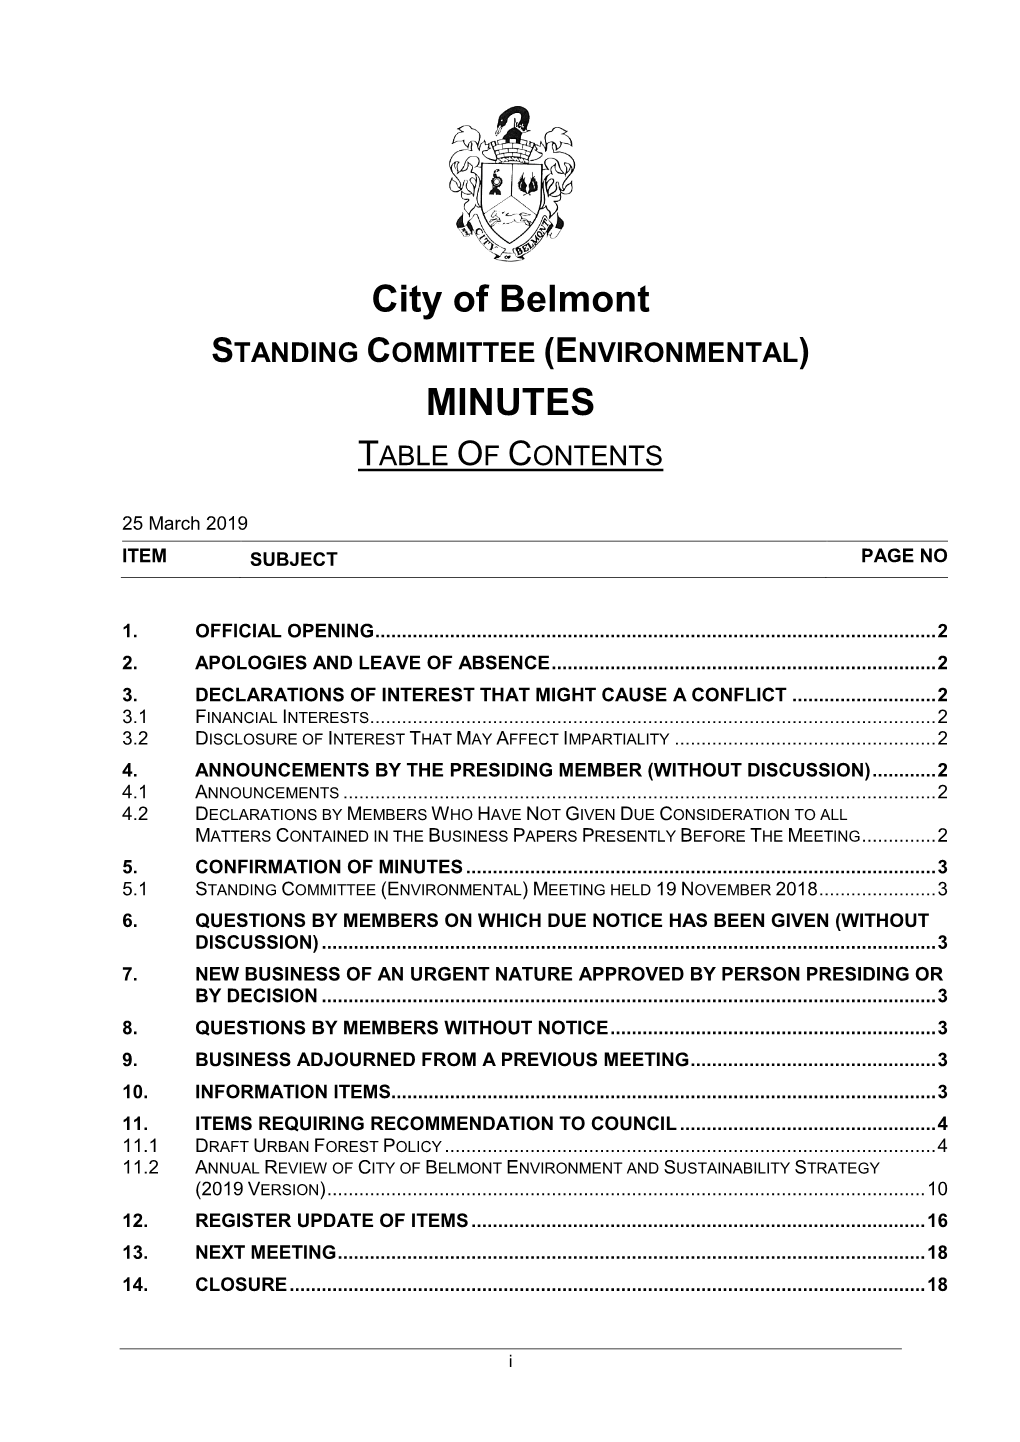 City of Belmont MINUTES